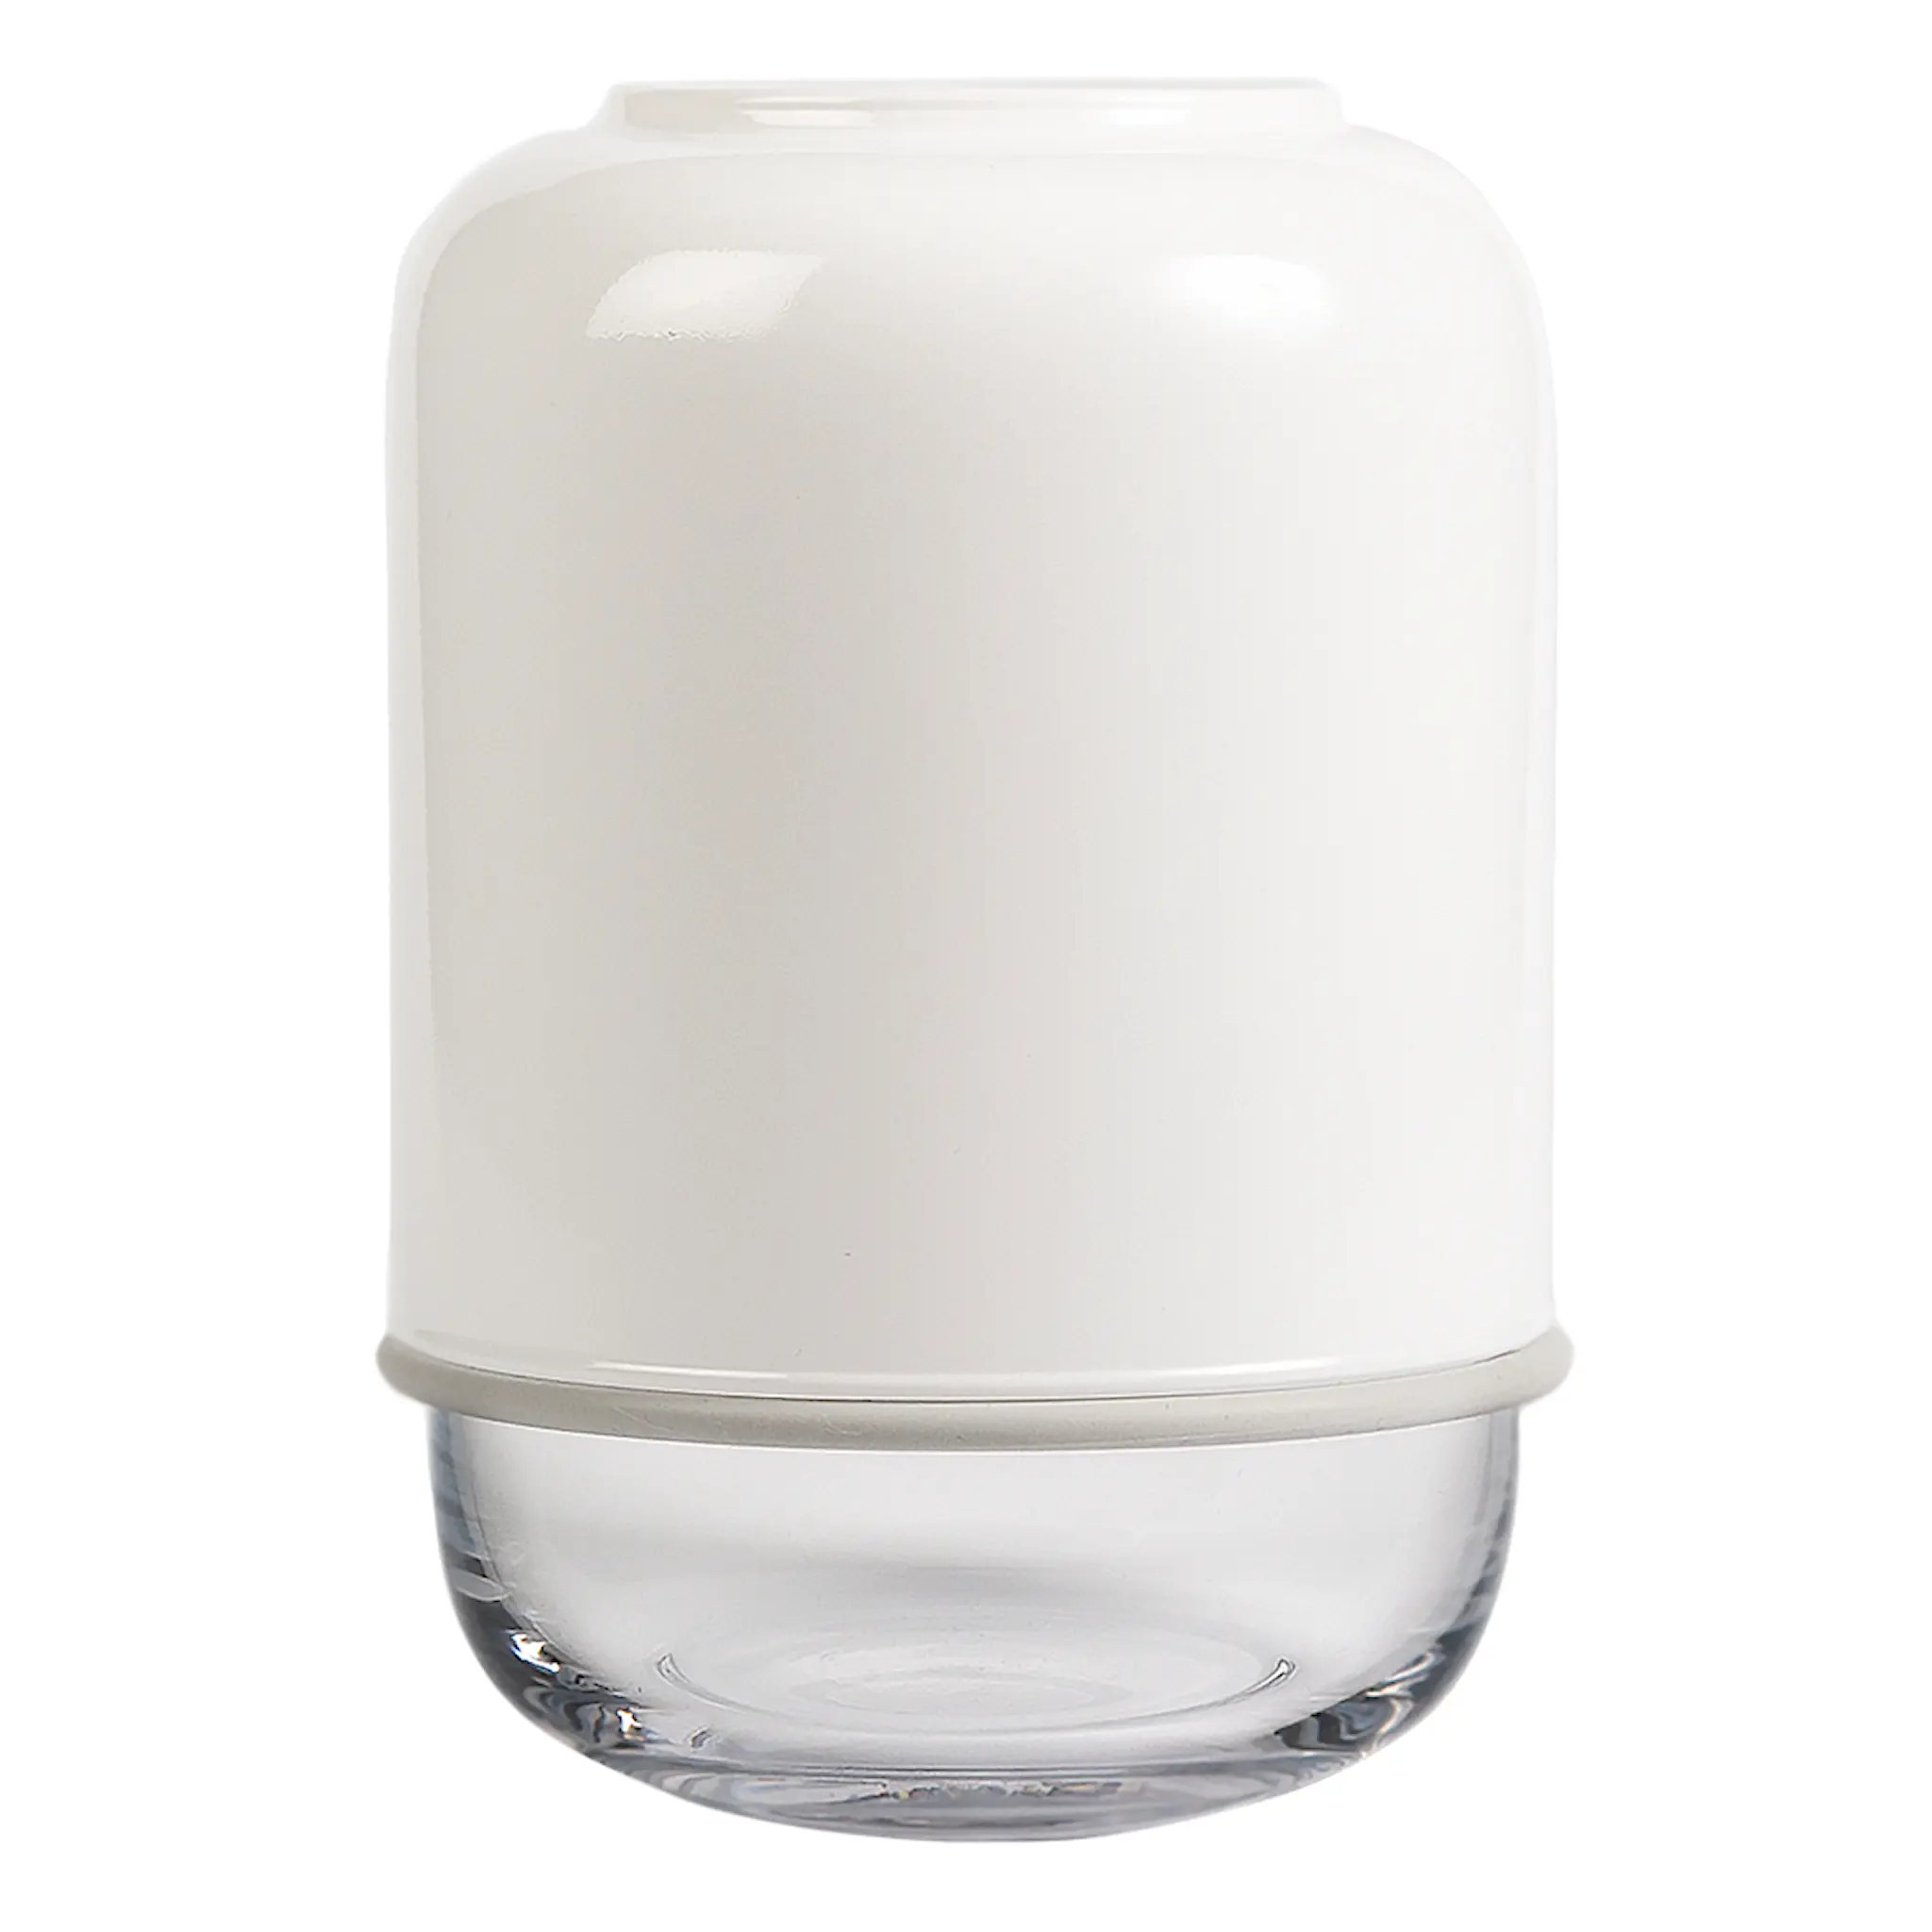 Muurla Kapsel justerbar vase glass hvit/klar